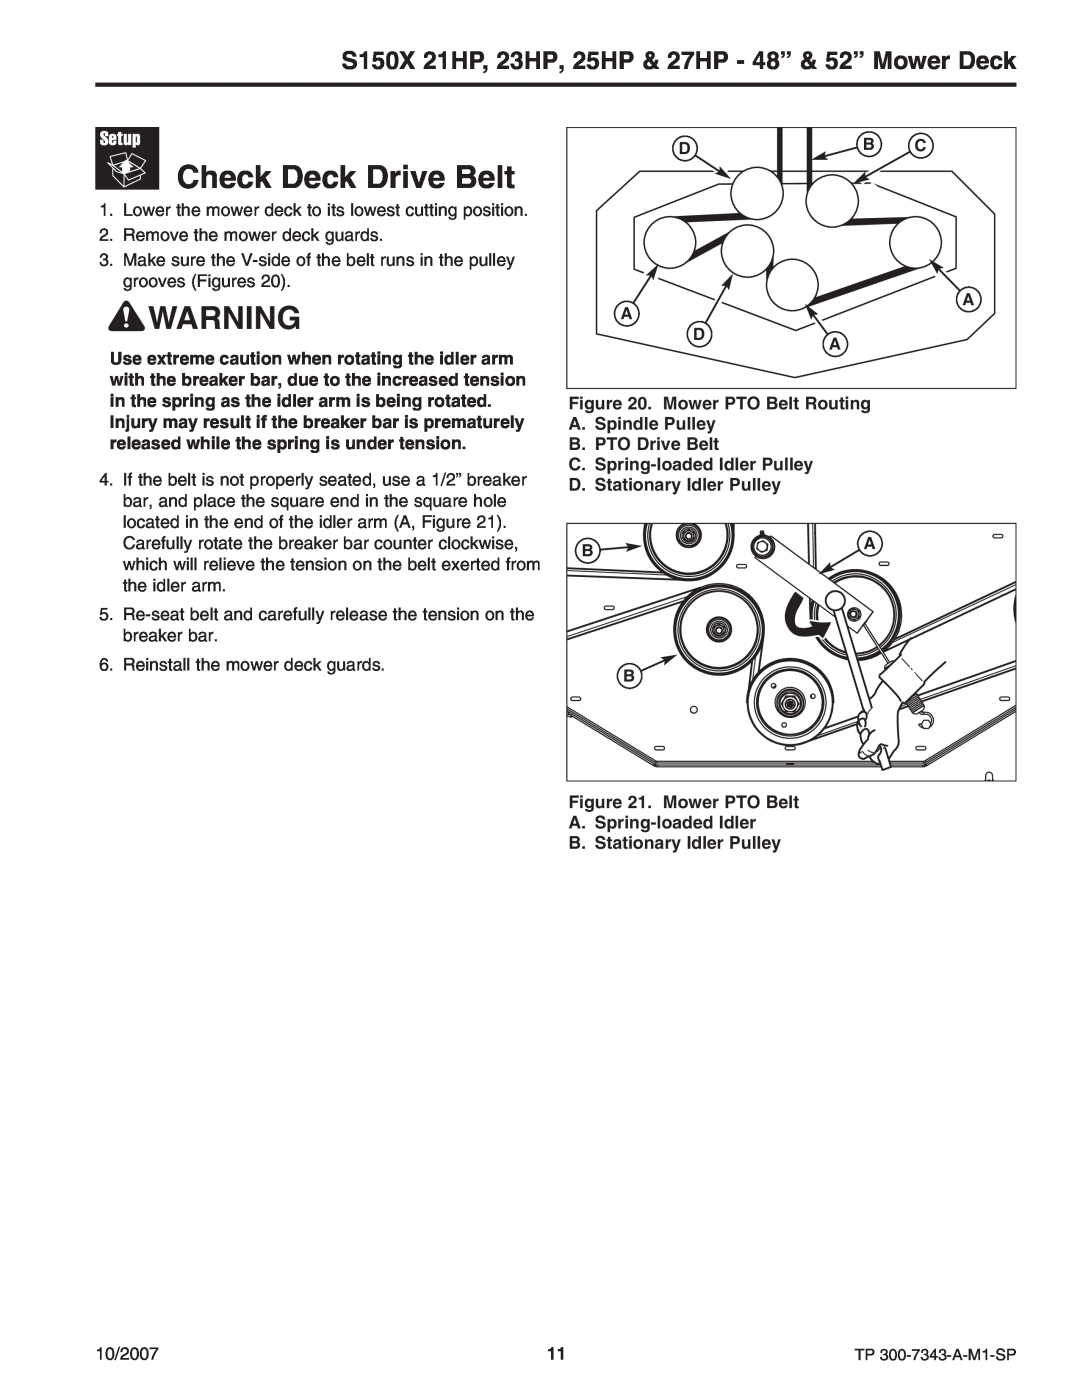 Snapper manual Check Deck Drive Belt, S150X 21HP, 23HP, 25HP & 27HP - 48” & 52” Mower Deck 